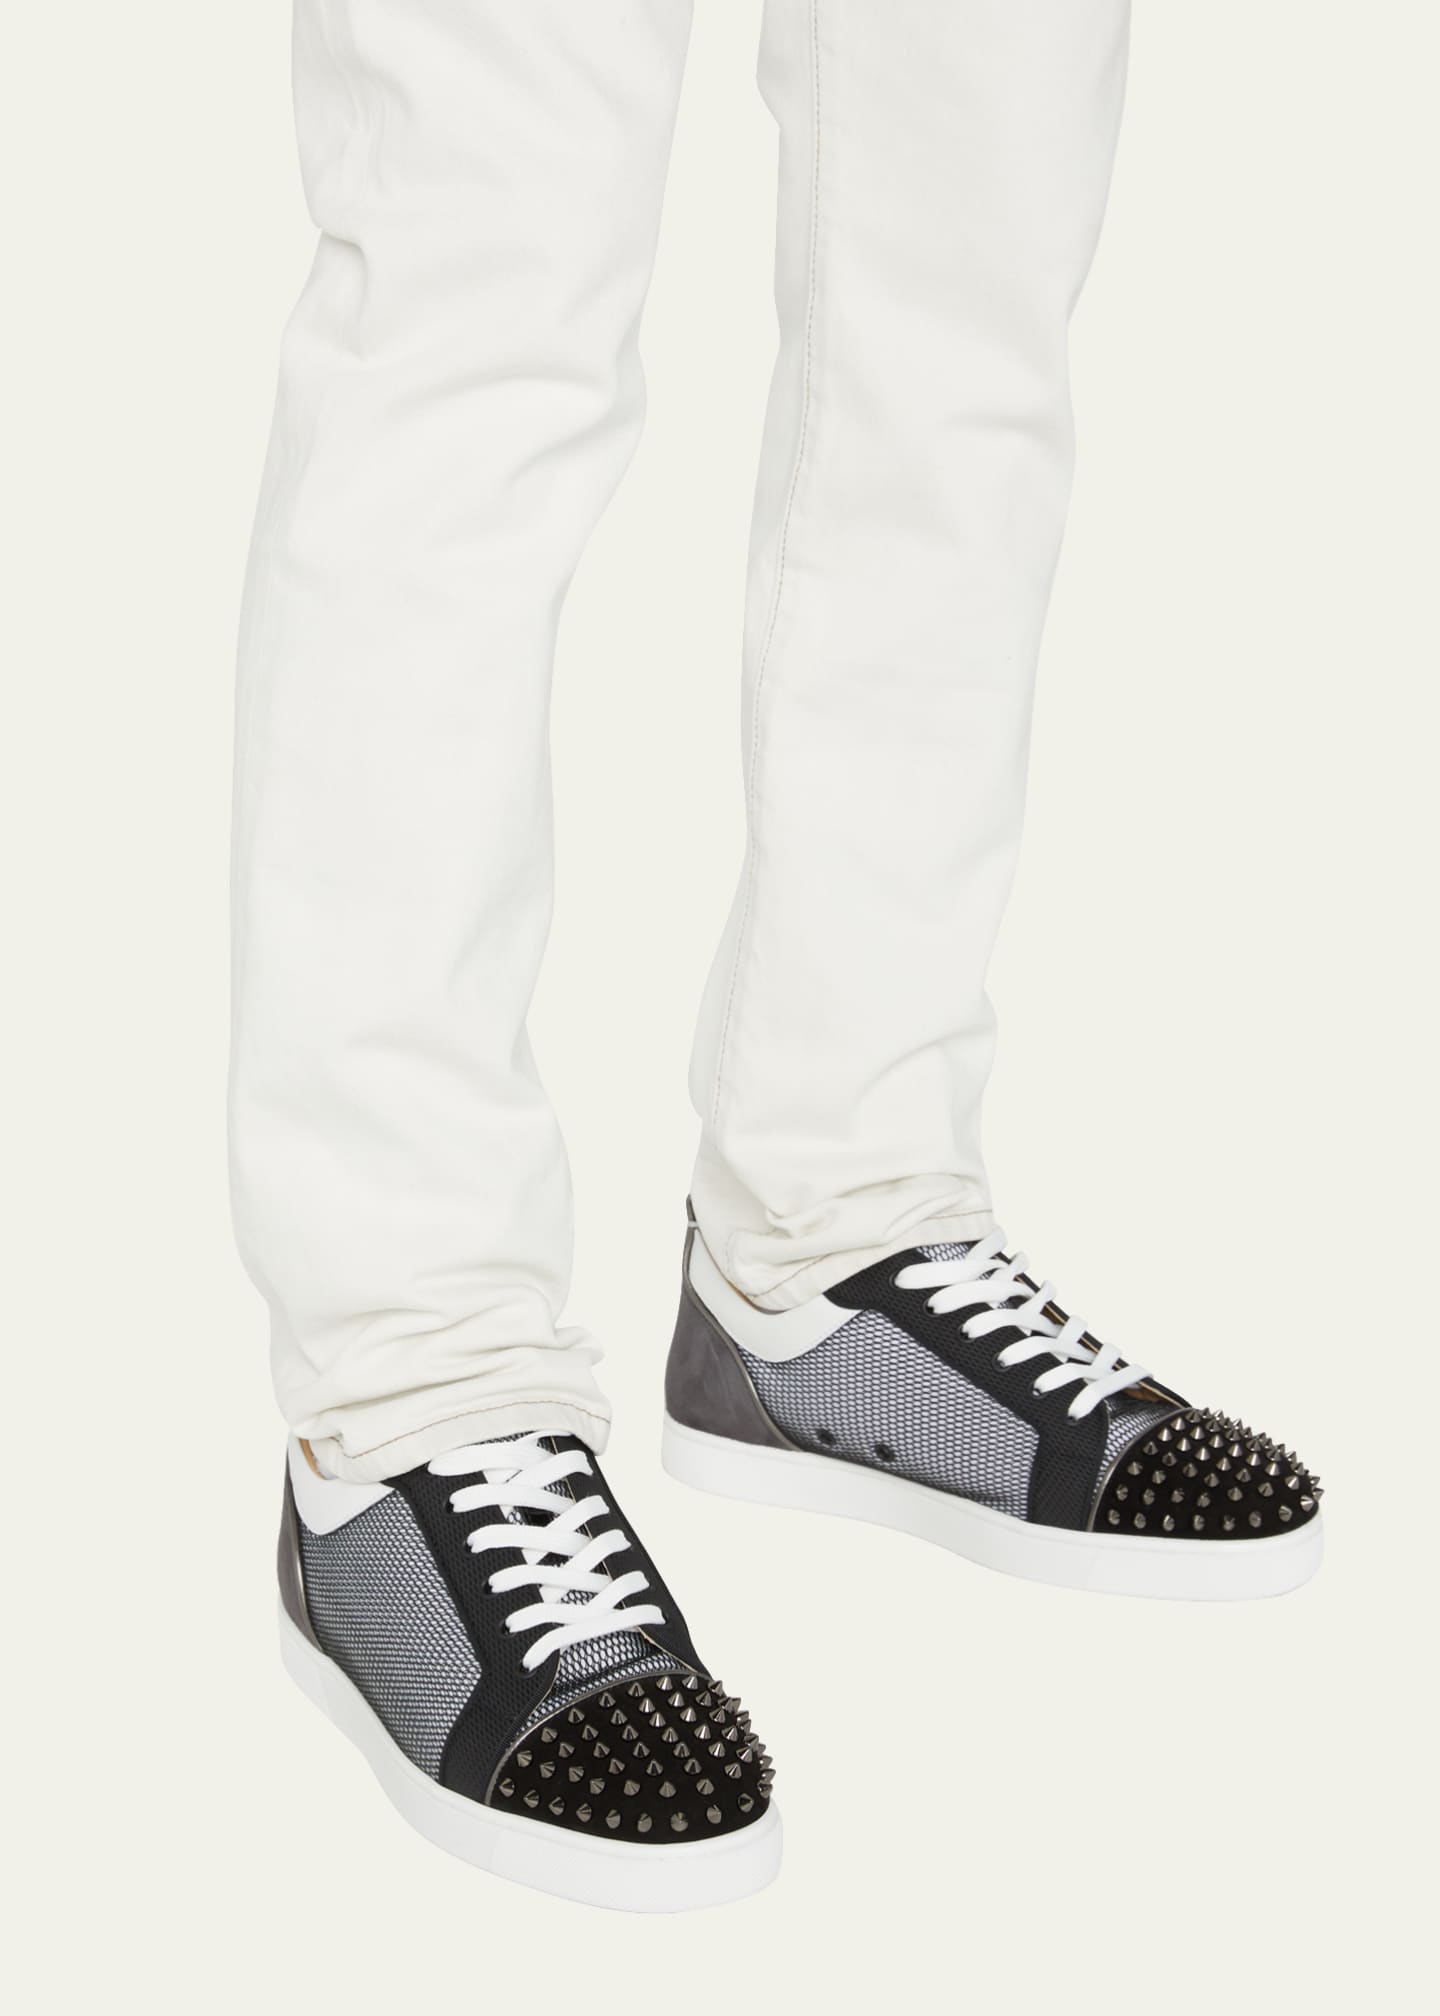 Christian Louboutin Men's Louis Junior Spikes Orlato Leather Sneakers